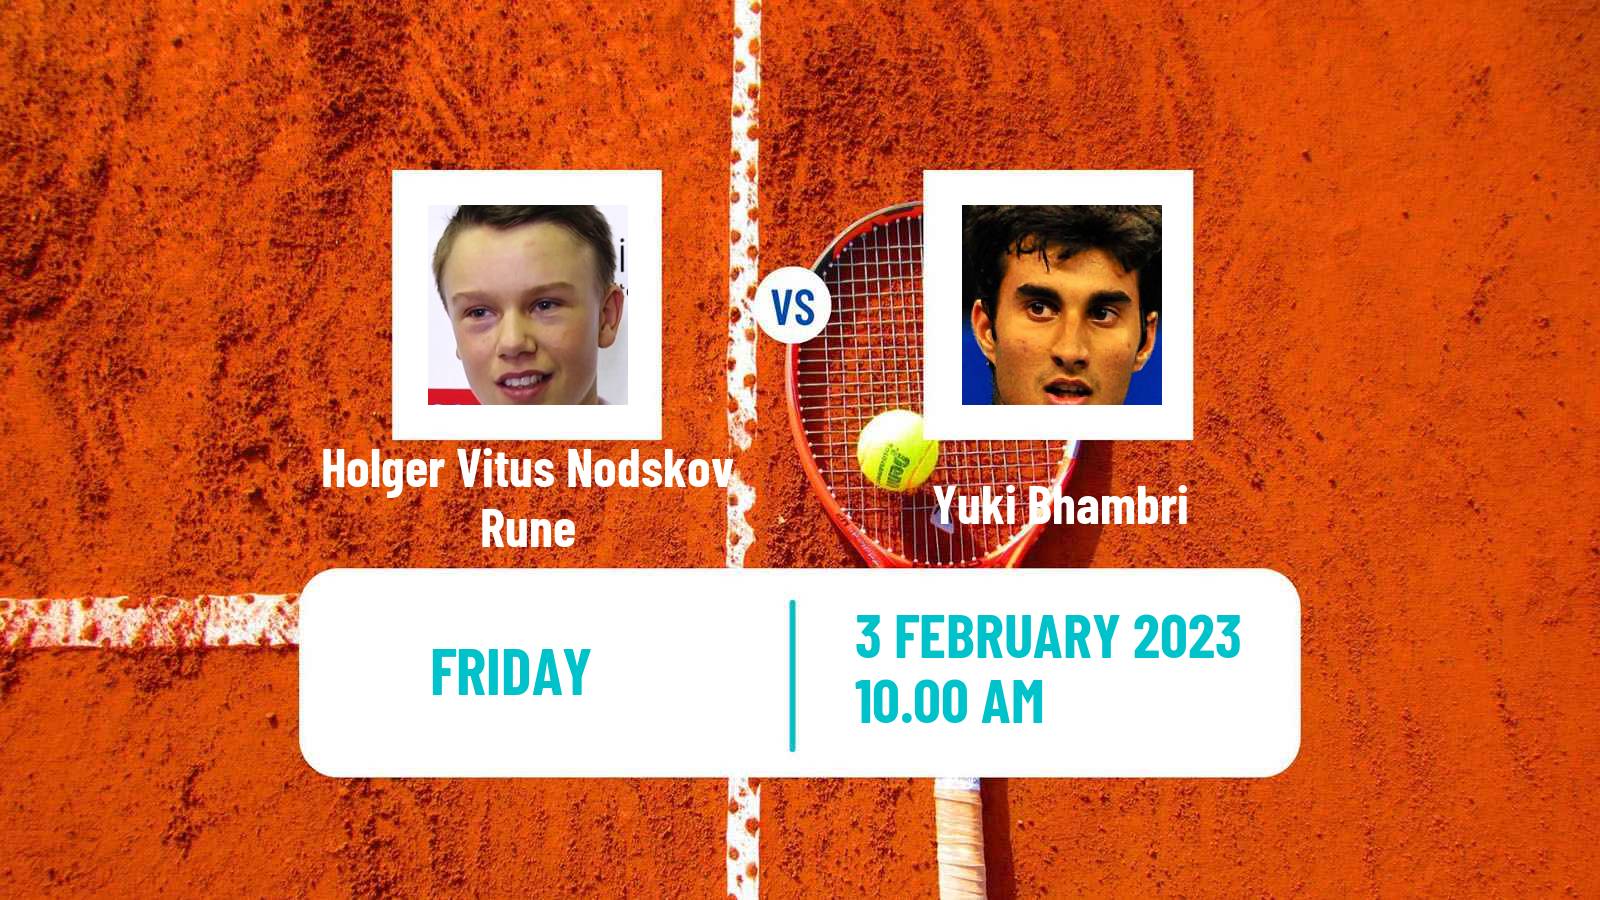 Tennis Davis Cup World Group I Holger Vitus Nodskov Rune - Yuki Bhambri